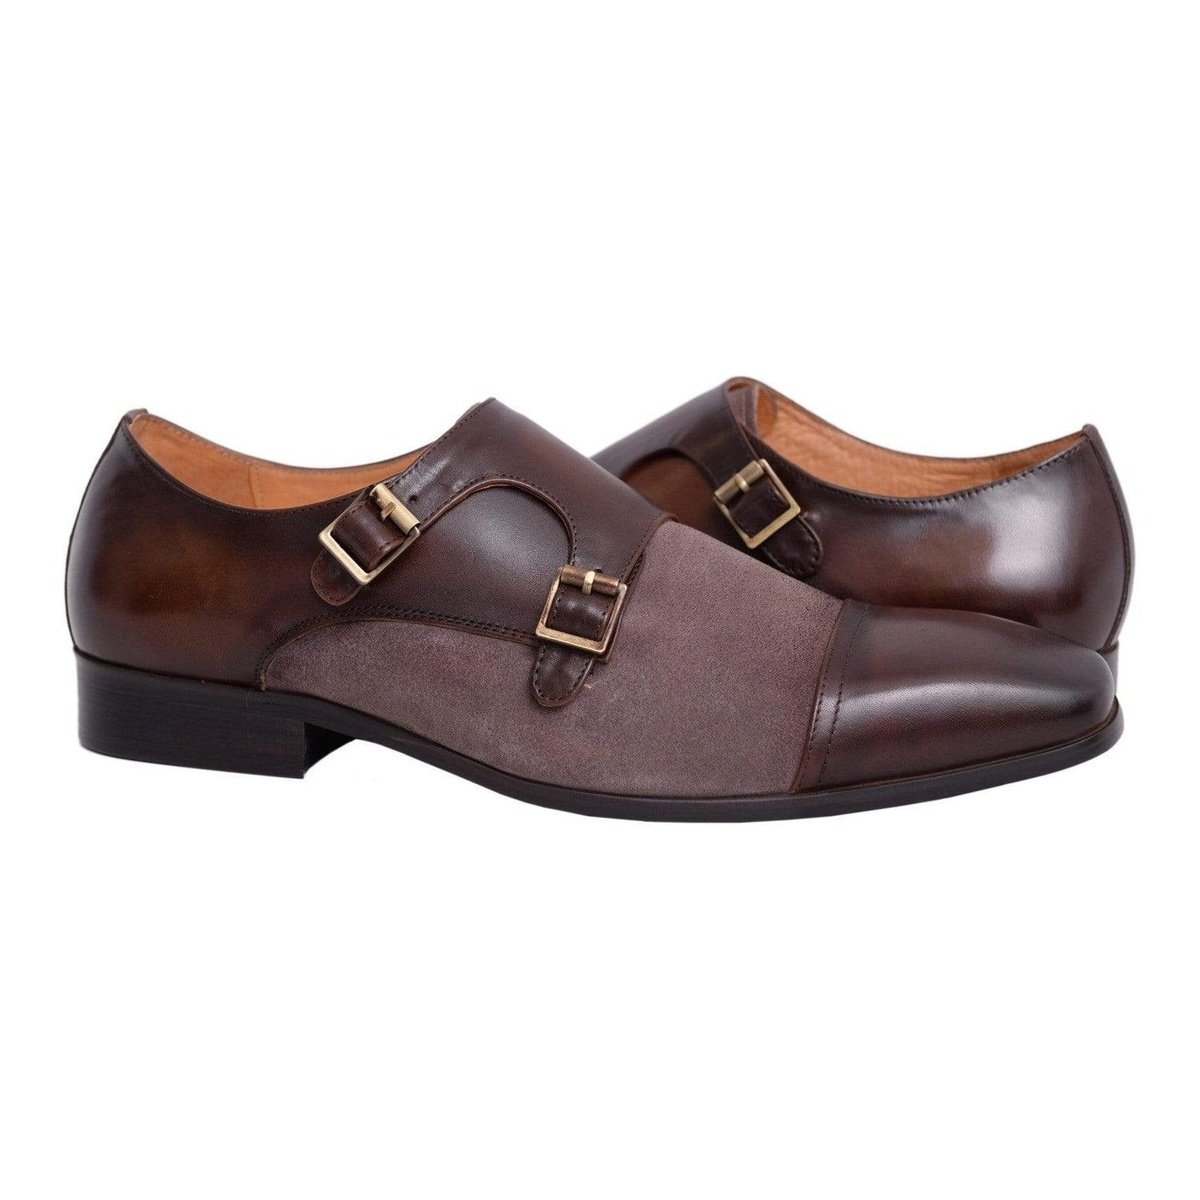 Carrucci SHOES 8.5 Mens Carrucci Brown Suede Cap Toe Oxford Leather Monk Strap Dress Shoes